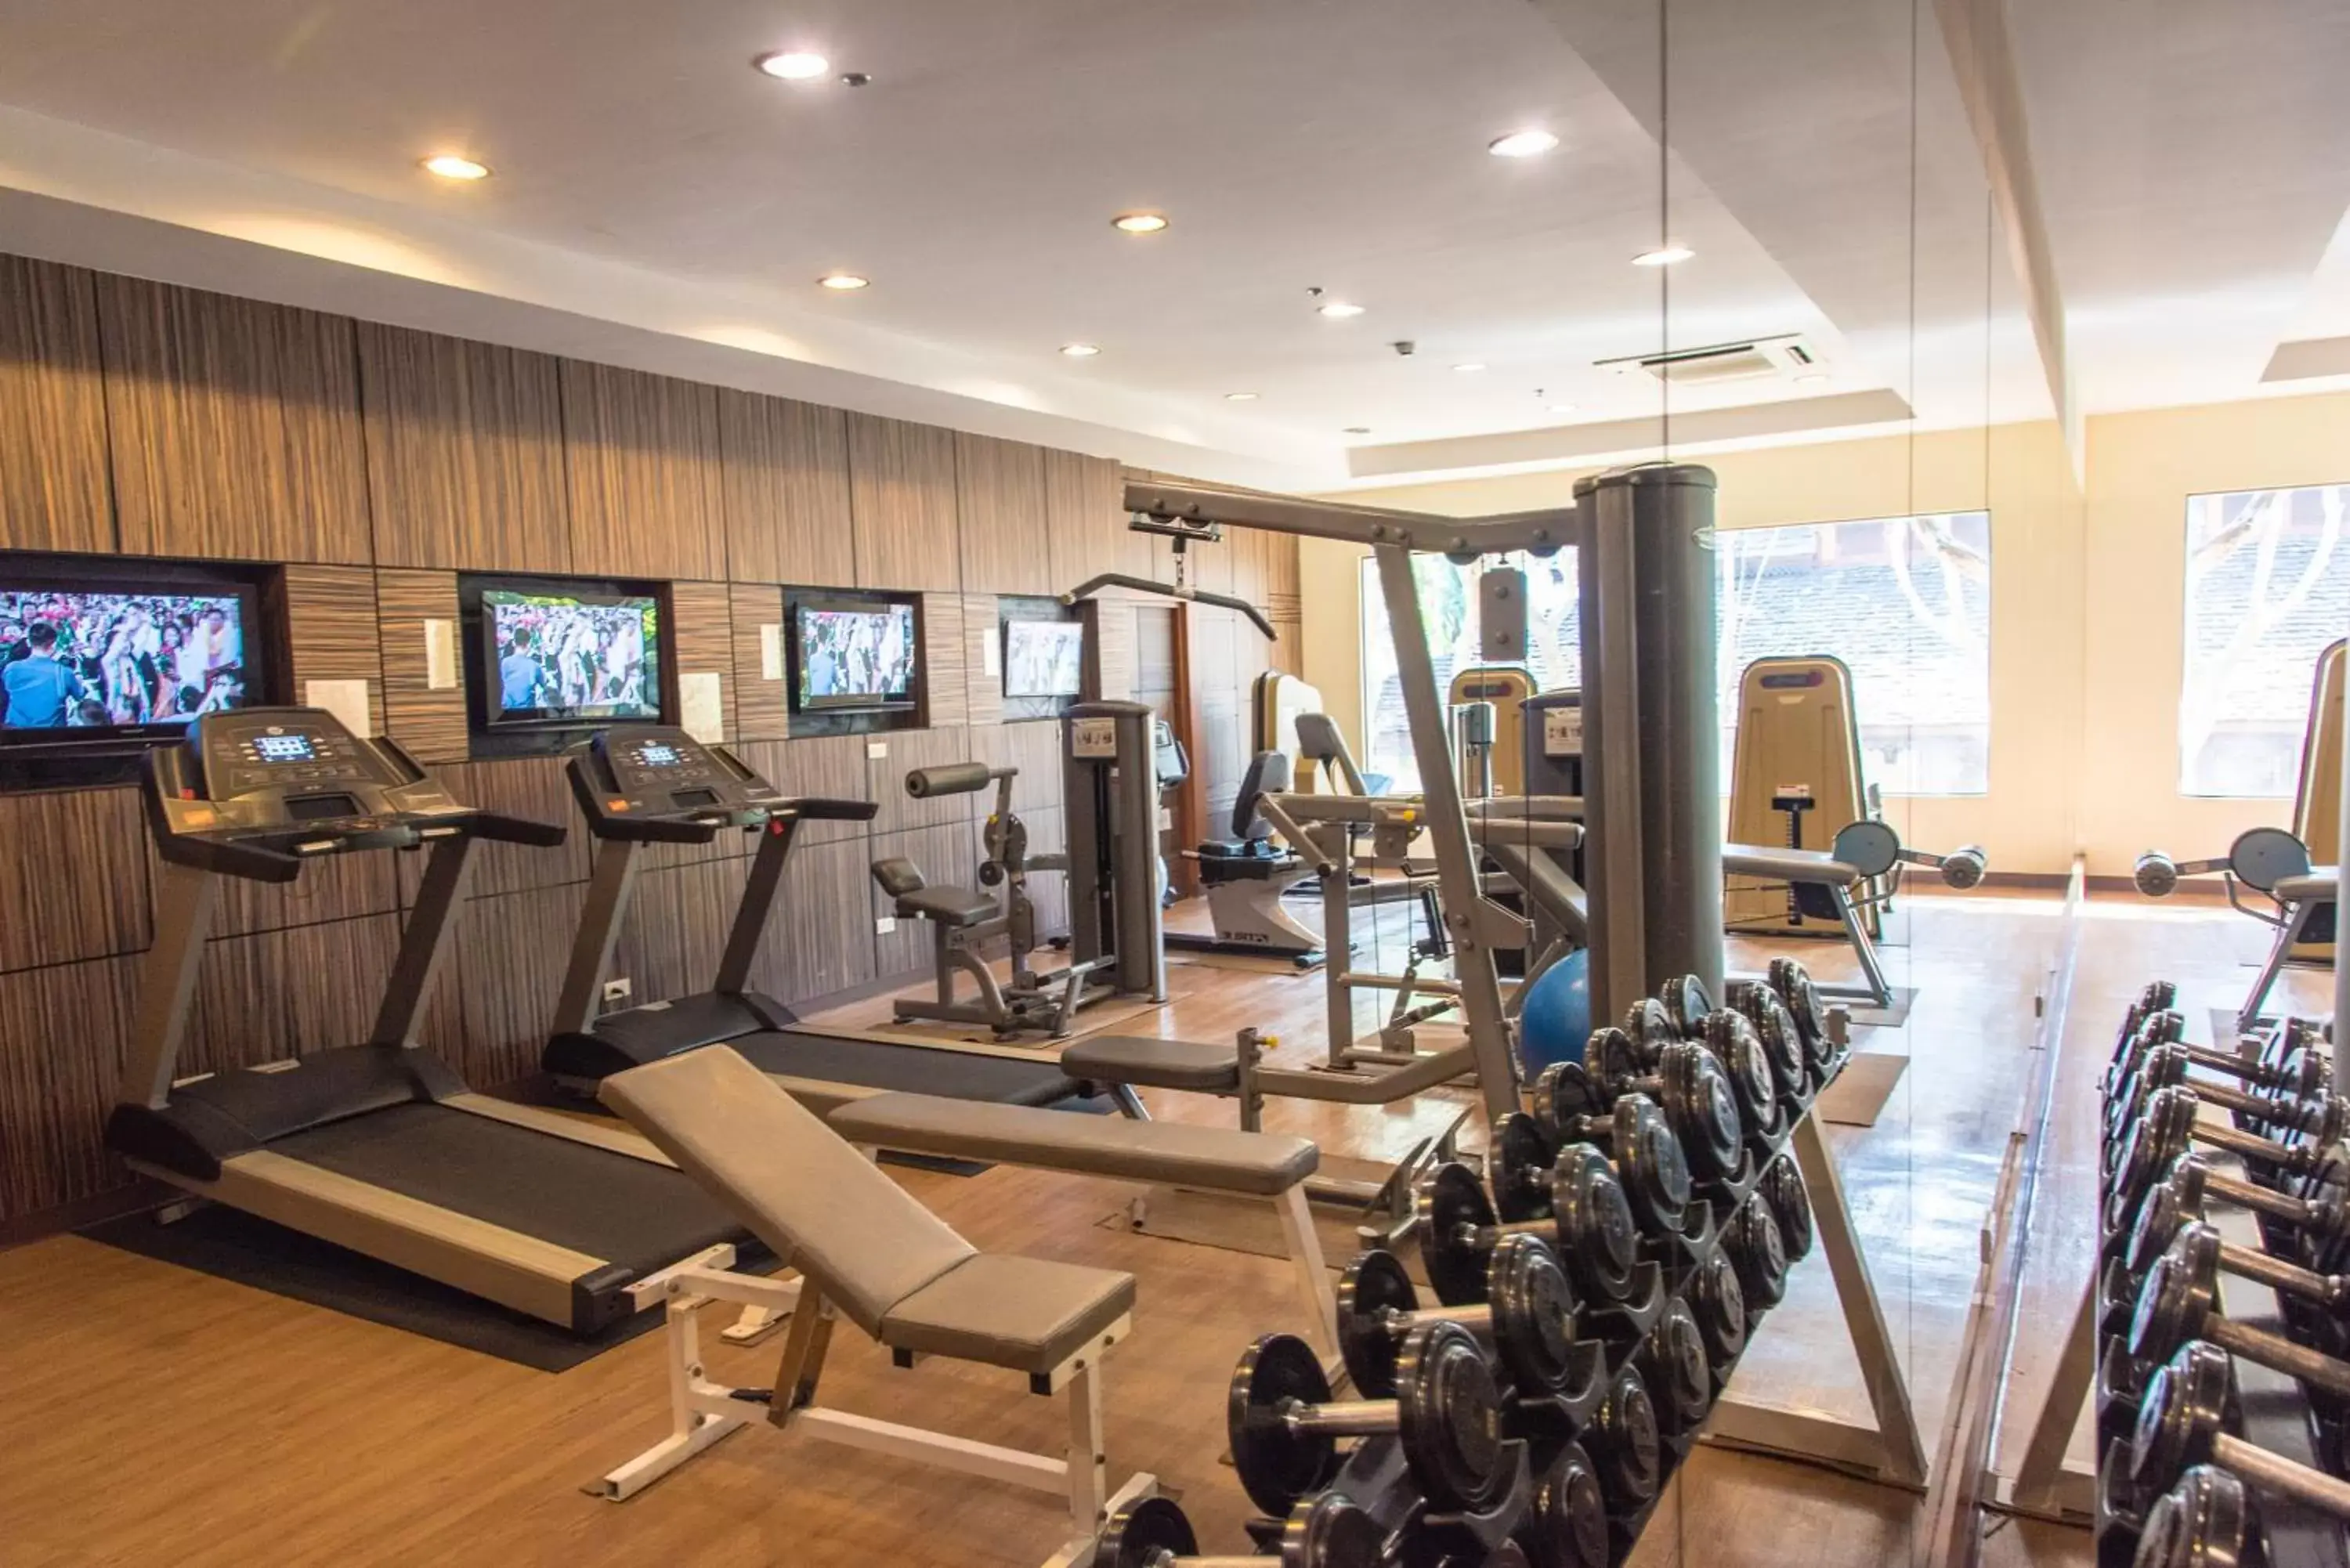 Fitness centre/facilities, Fitness Center/Facilities in Centara Khum Phaya Resort & Spa, Centara Boutique Collection